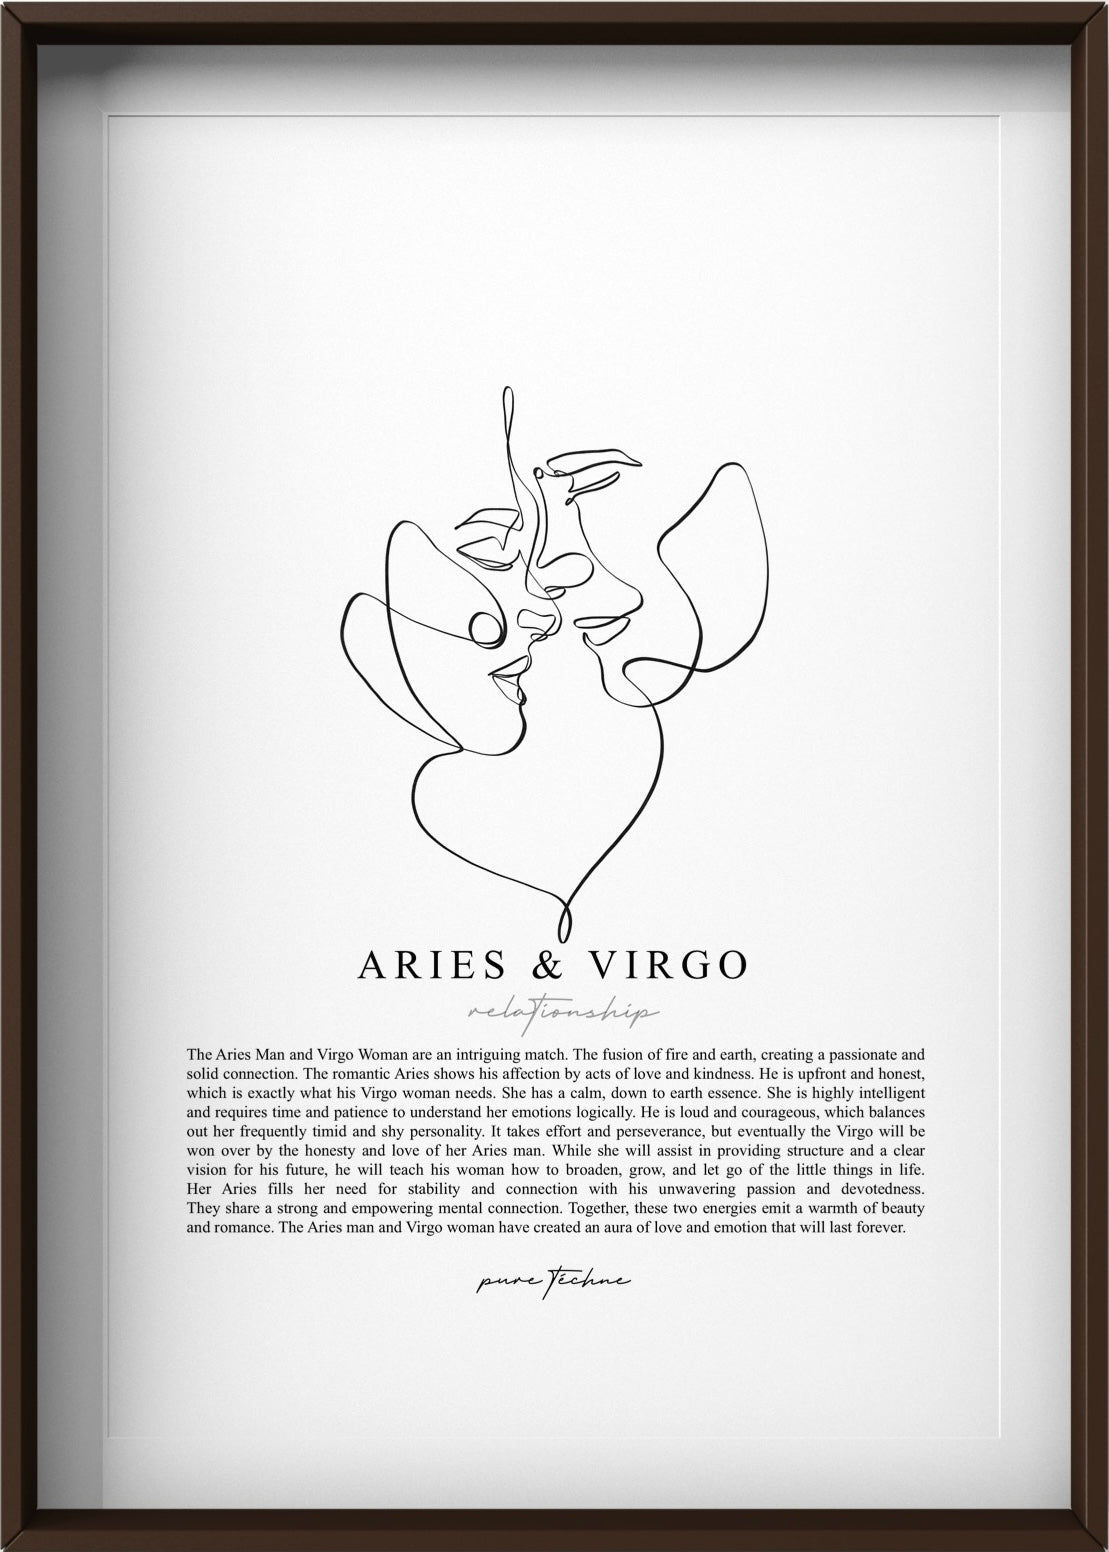 Aries Man & Virgo Woman